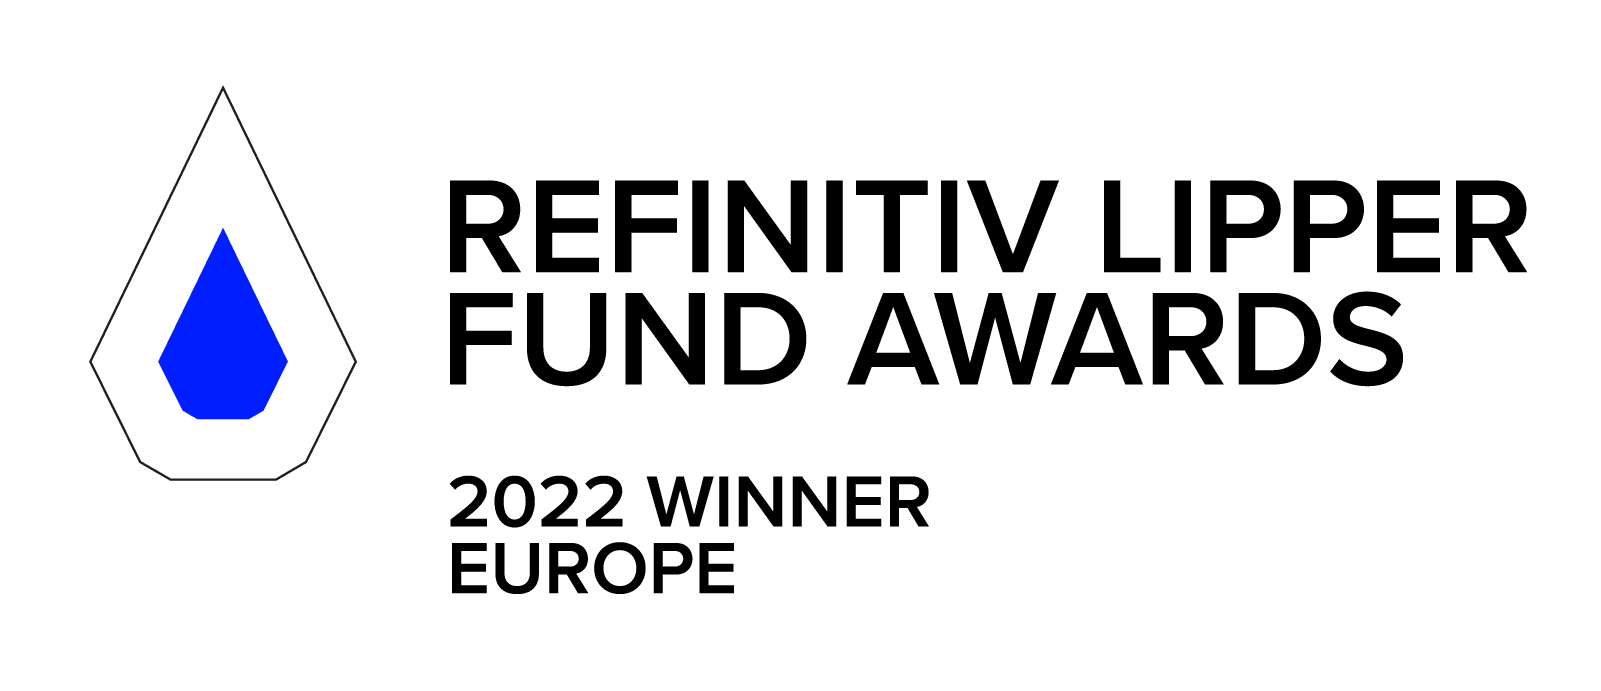 RFL Awards Winner Europe